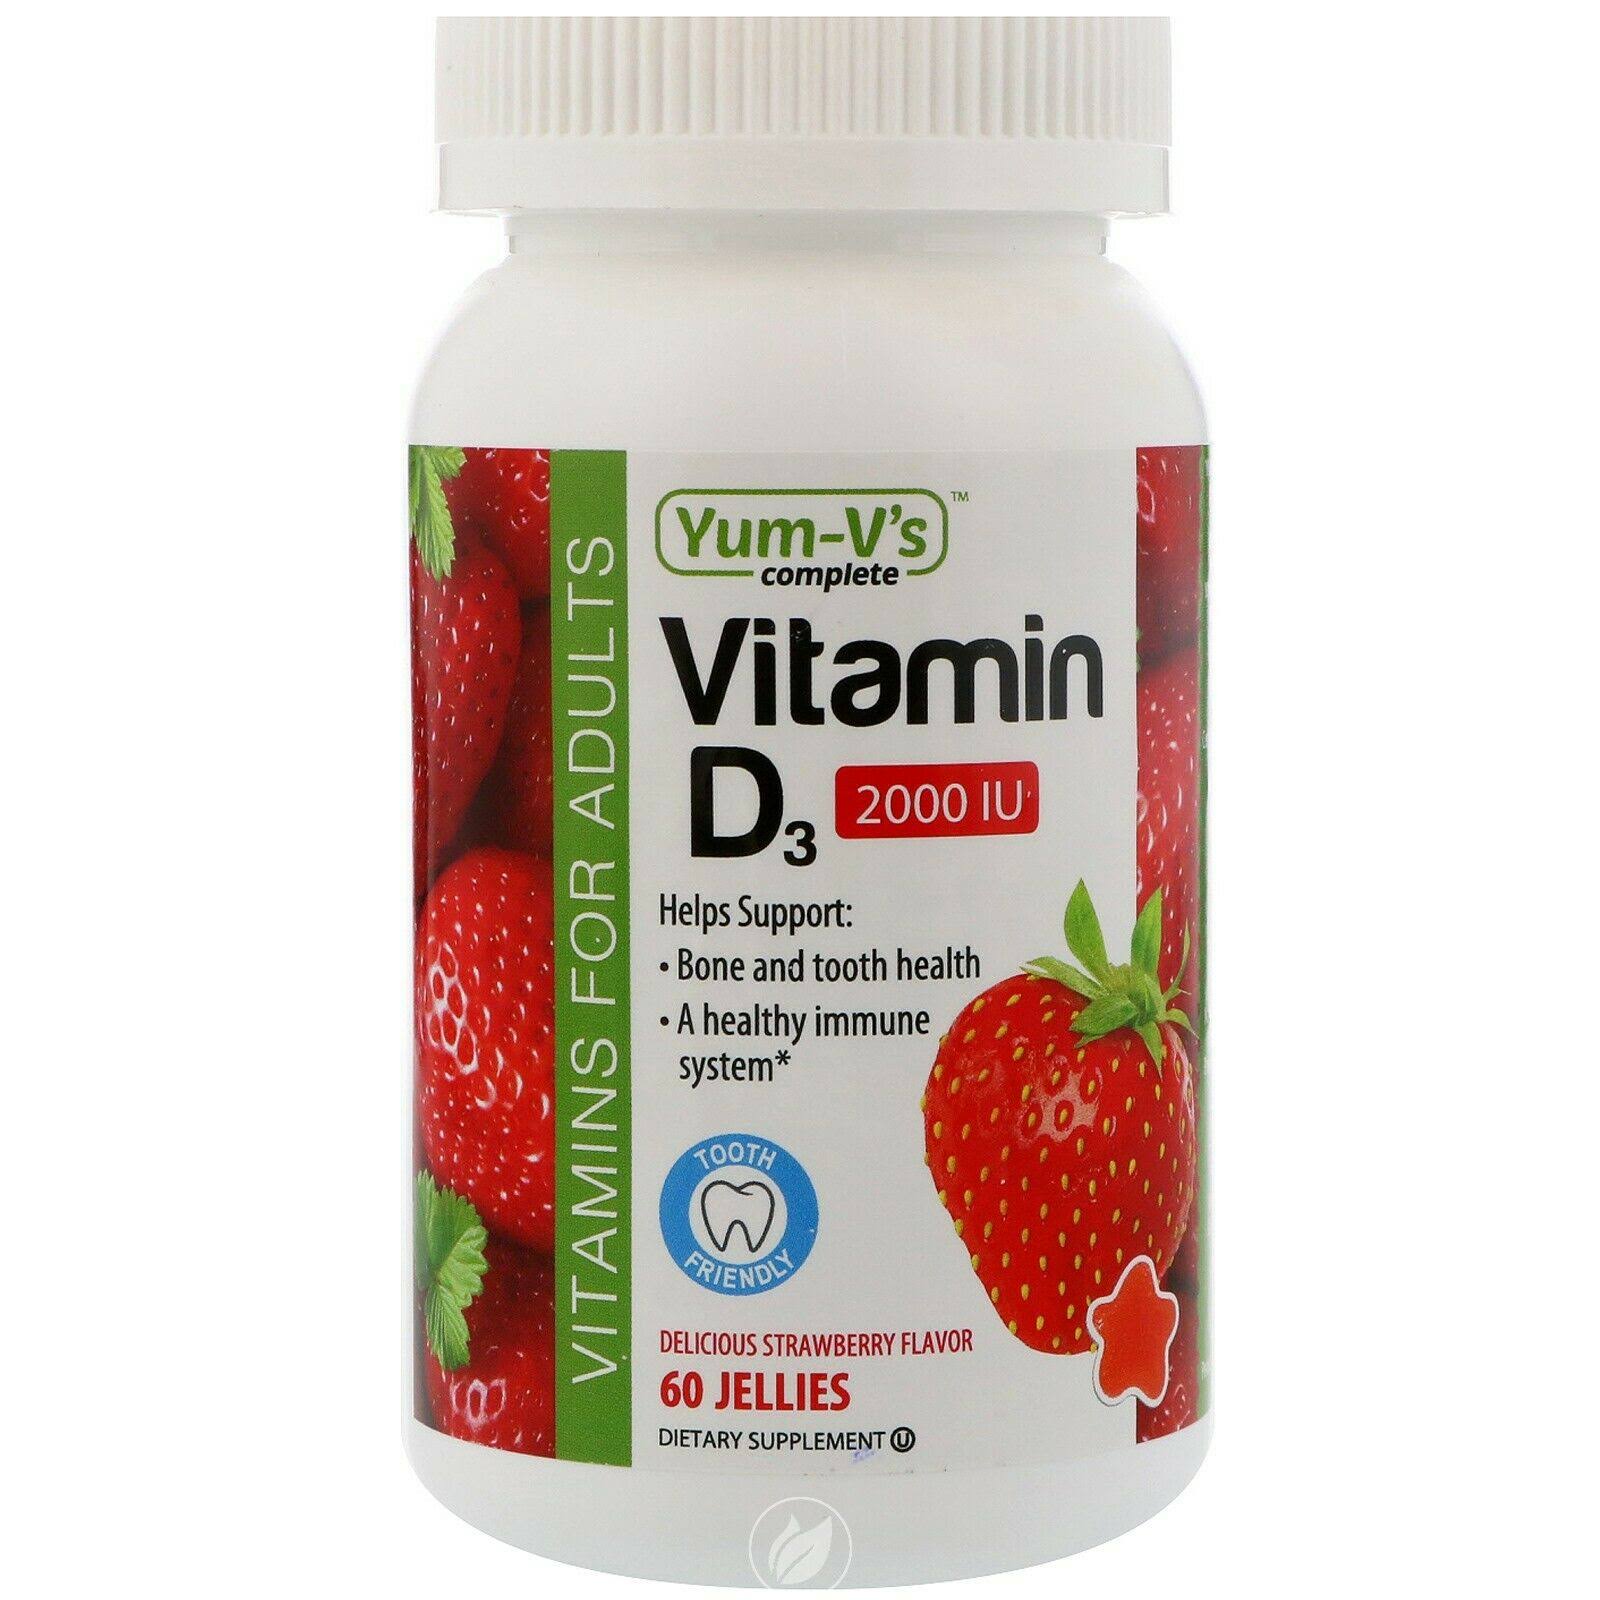 Yum - V's Vitamin D3 2000 IU 60 Count Strawberry Flavor Jellies